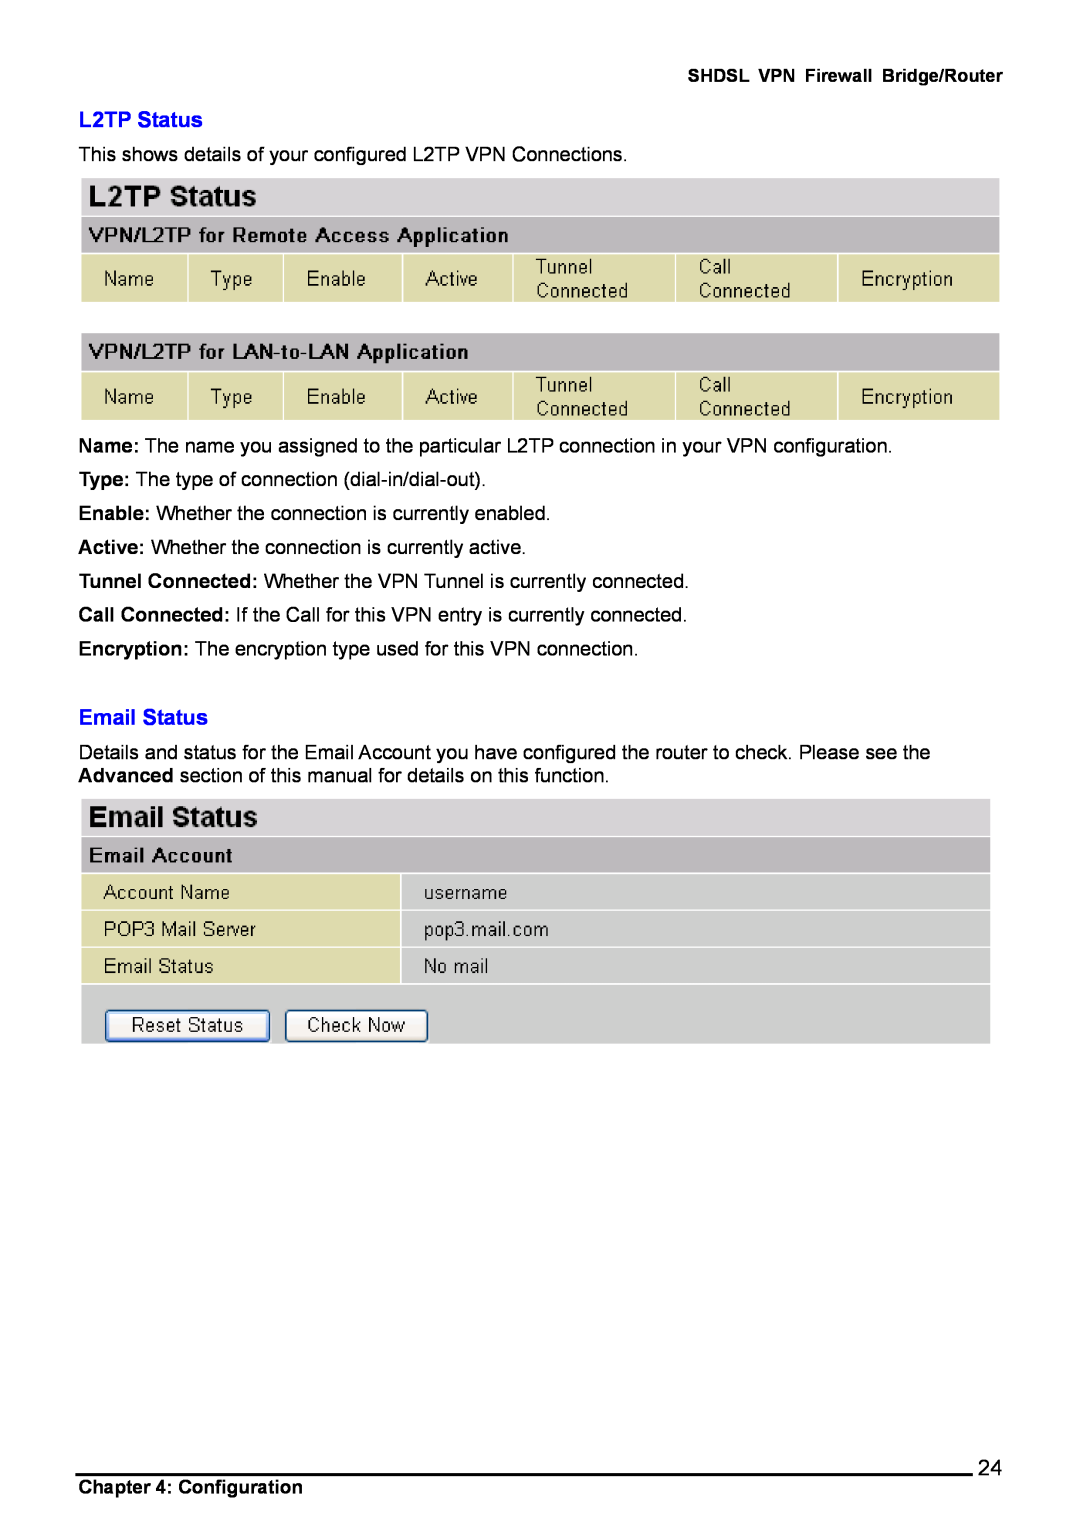 Billion Electric Company 8501 user manual L2TP Status, Email Status 